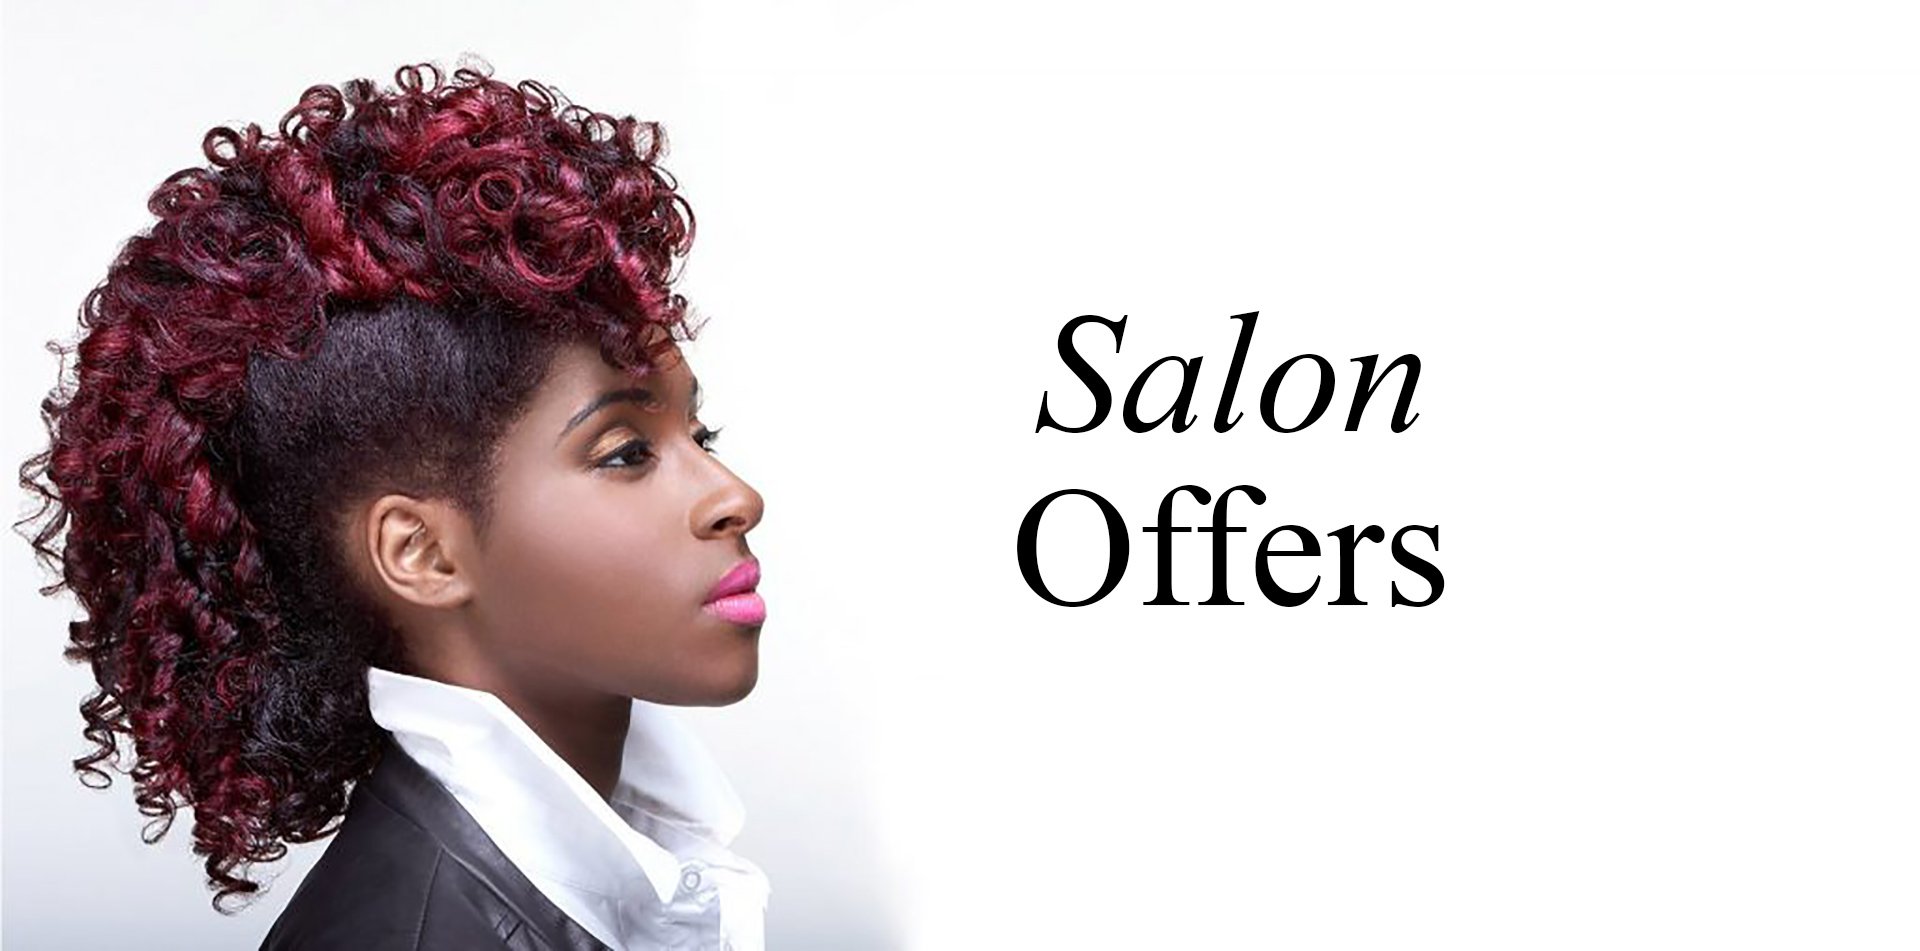 Salon Offers at Afrotherapy Hair Salon in Edmonton, London